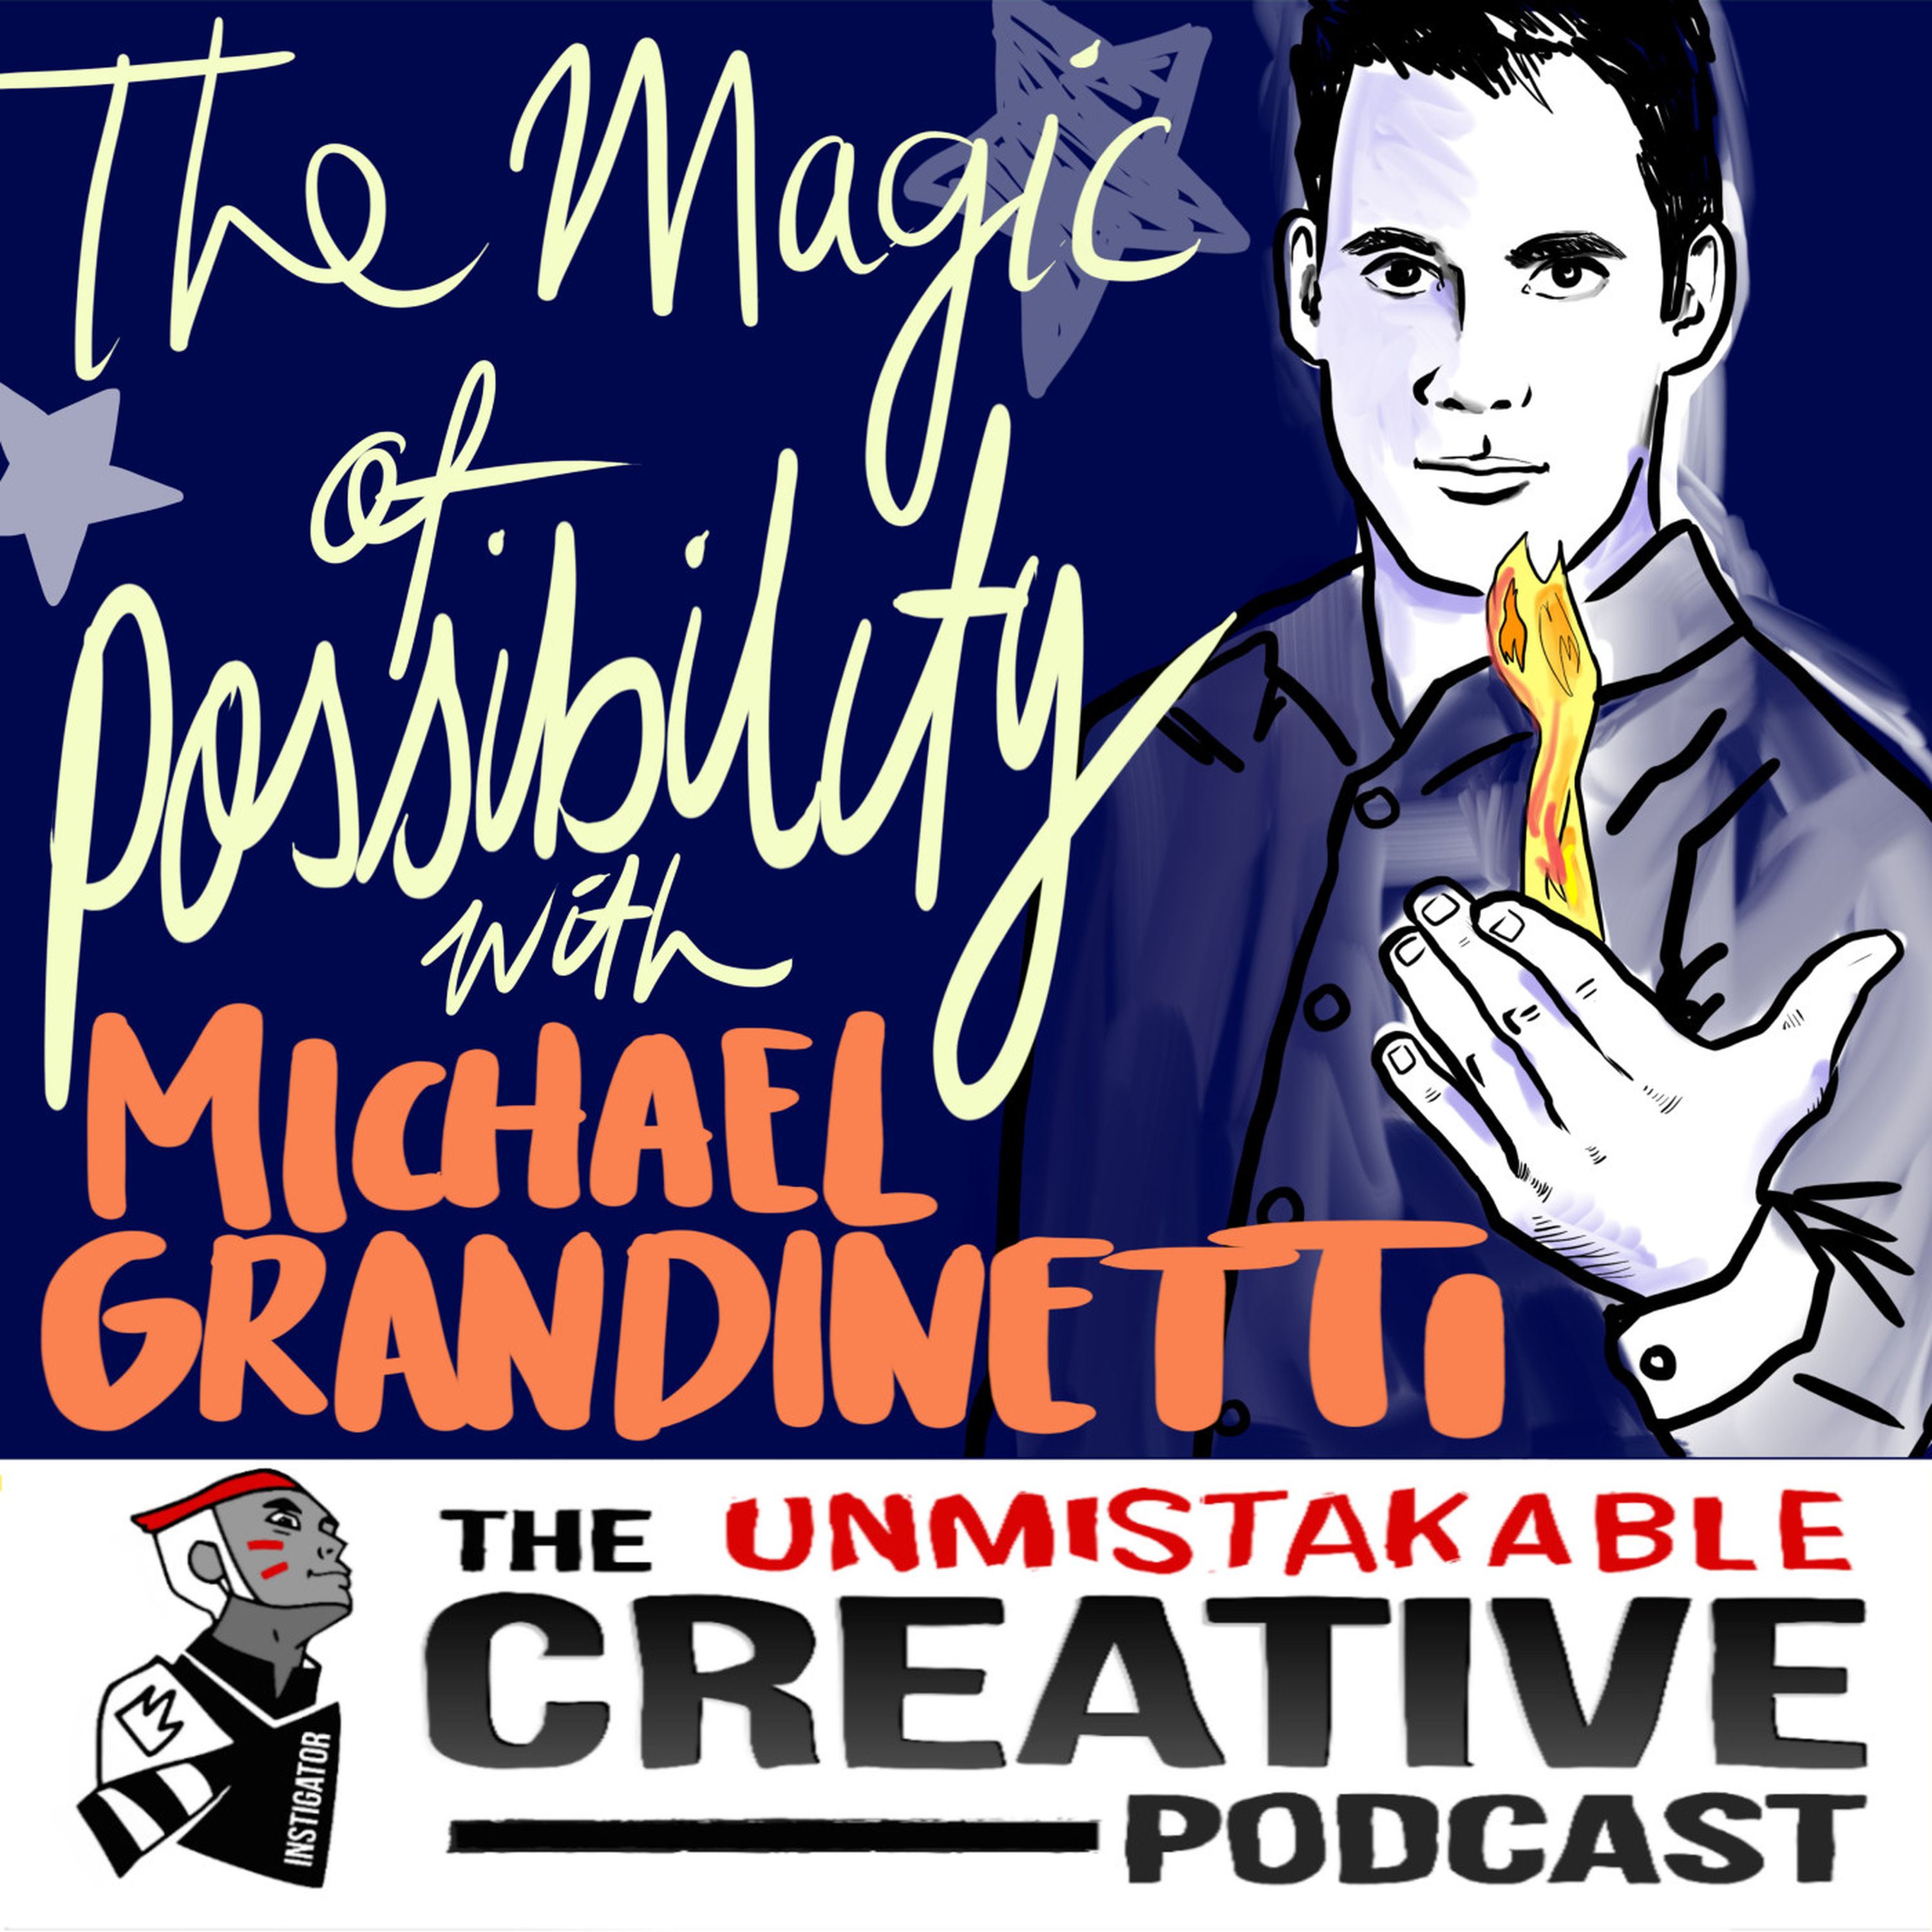 The Magic of Possibility with Michael Grandinetti Image